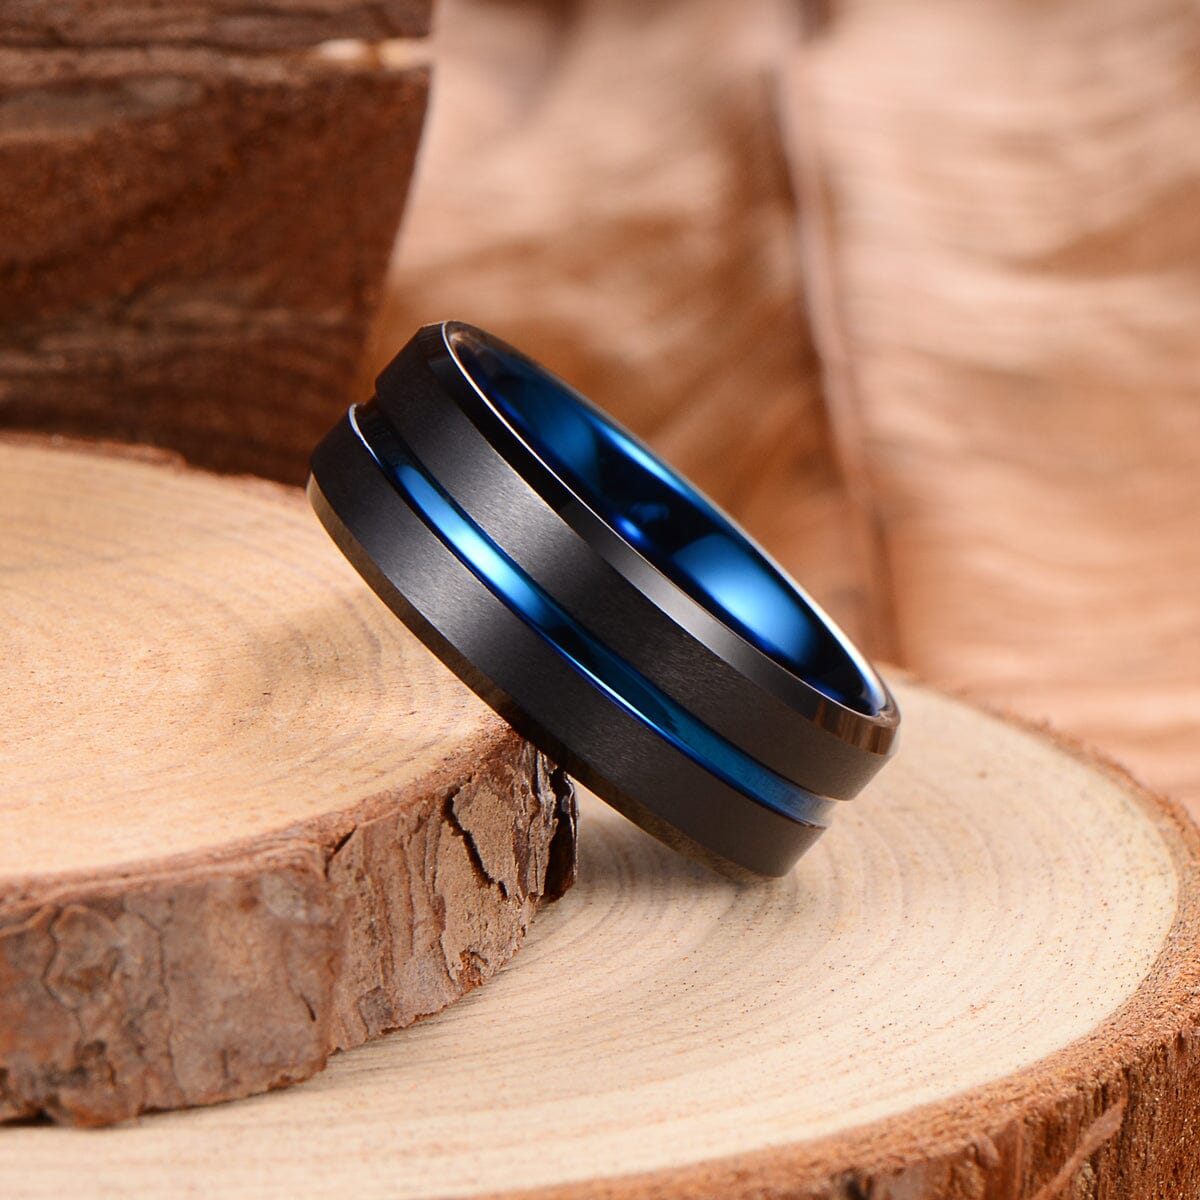 Men's Blue Groove Matte Black Tungsten Ring OY-R091 Men's Ring Ouyuan Jewelry 